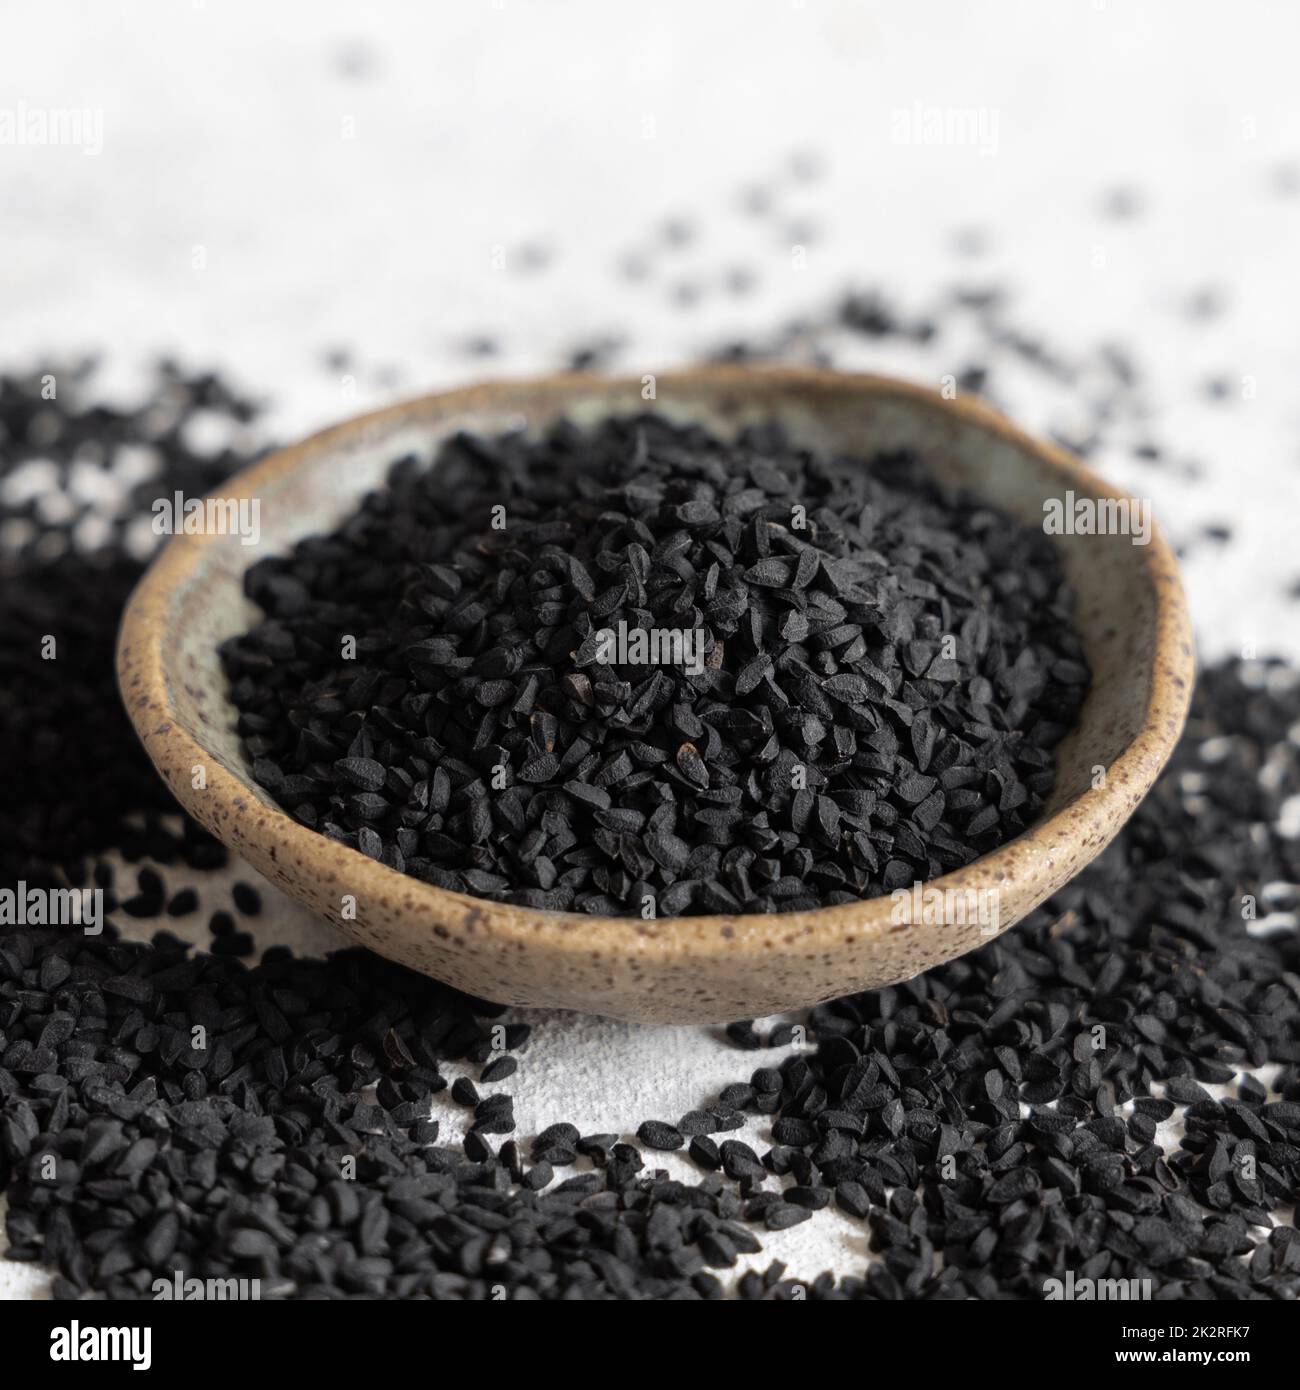 Indian spice Black cumin (nigella sativa or kalonji) seeds in bowl close up Stock Photo